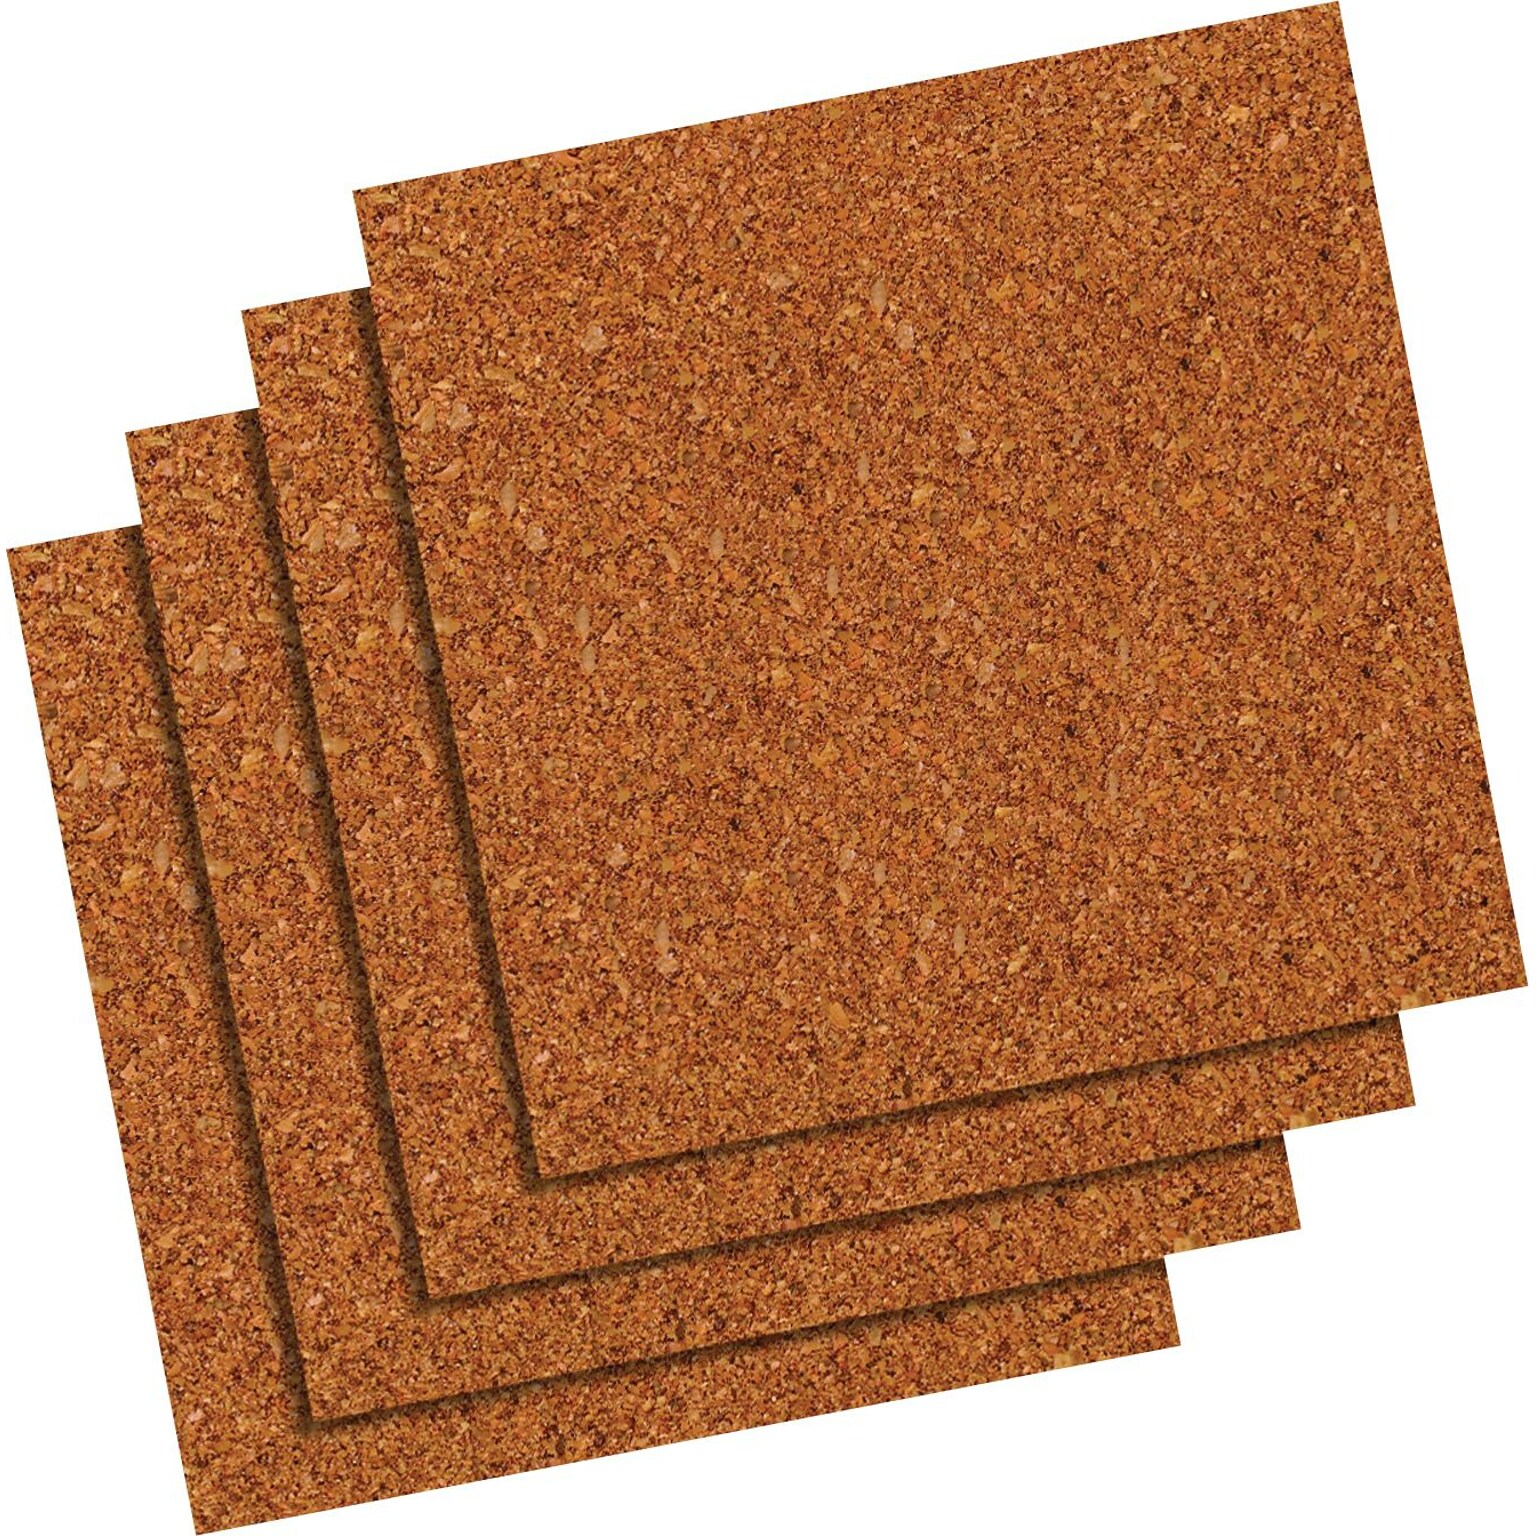 Quartet® Natural Cork Tiles, 12 x 12, Frameless, Modular, 4 Pack